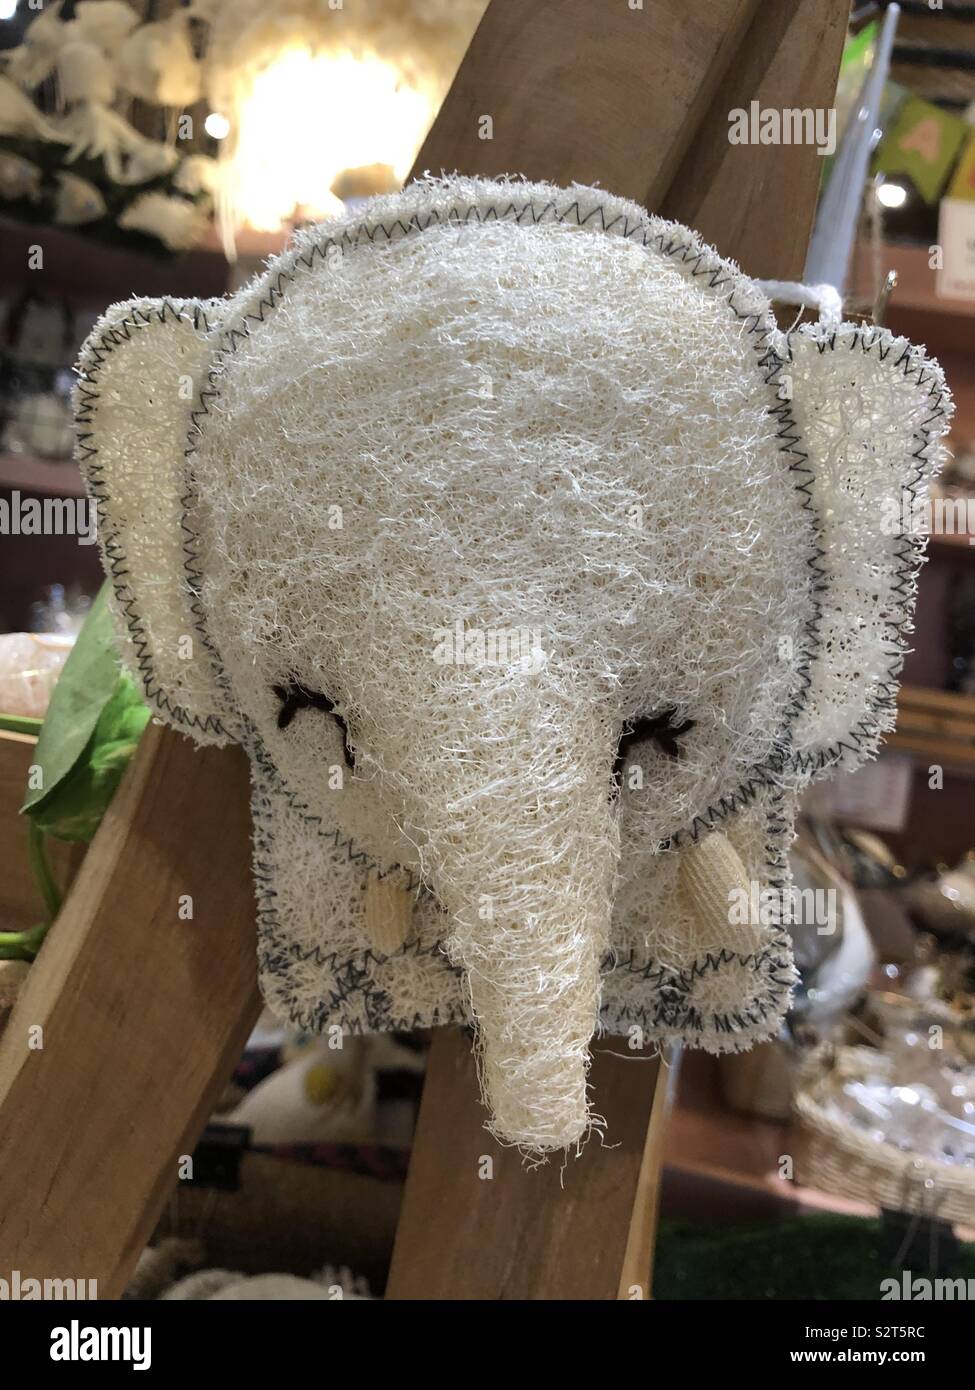 Elephant luffa bath sponge Stock Photo